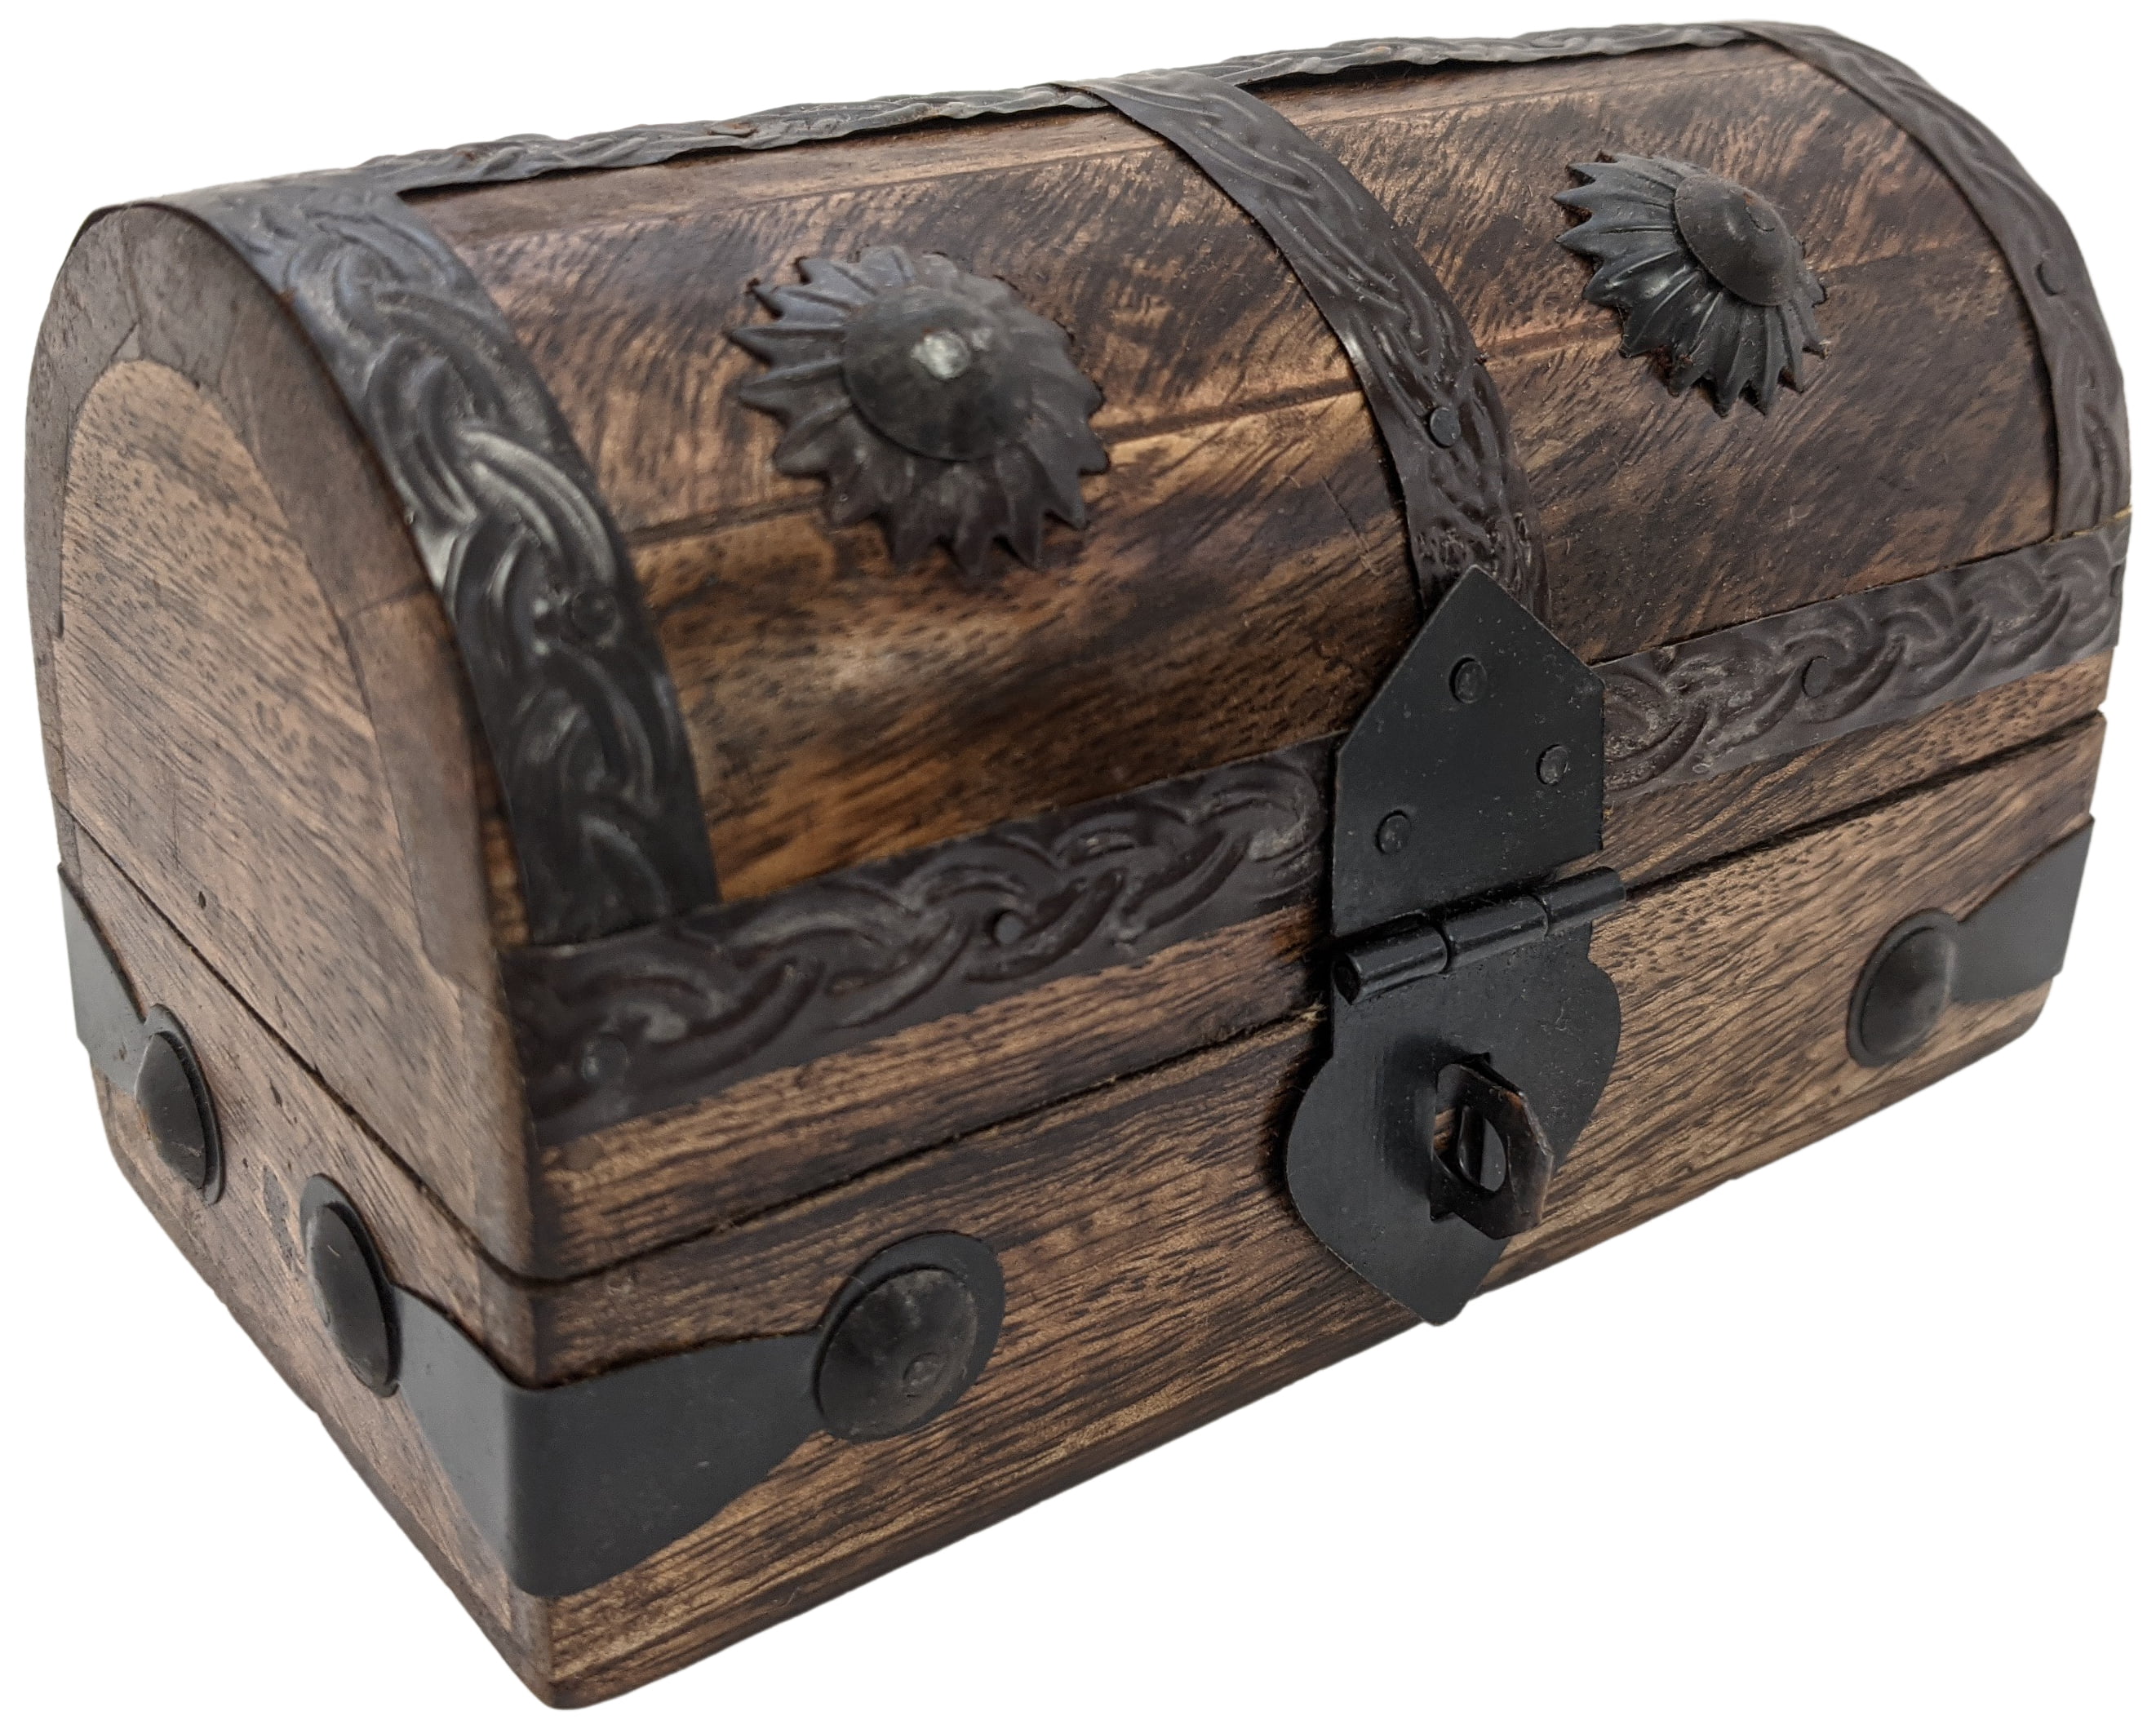 Wooden Box Treasure Pirate Chest Collectible